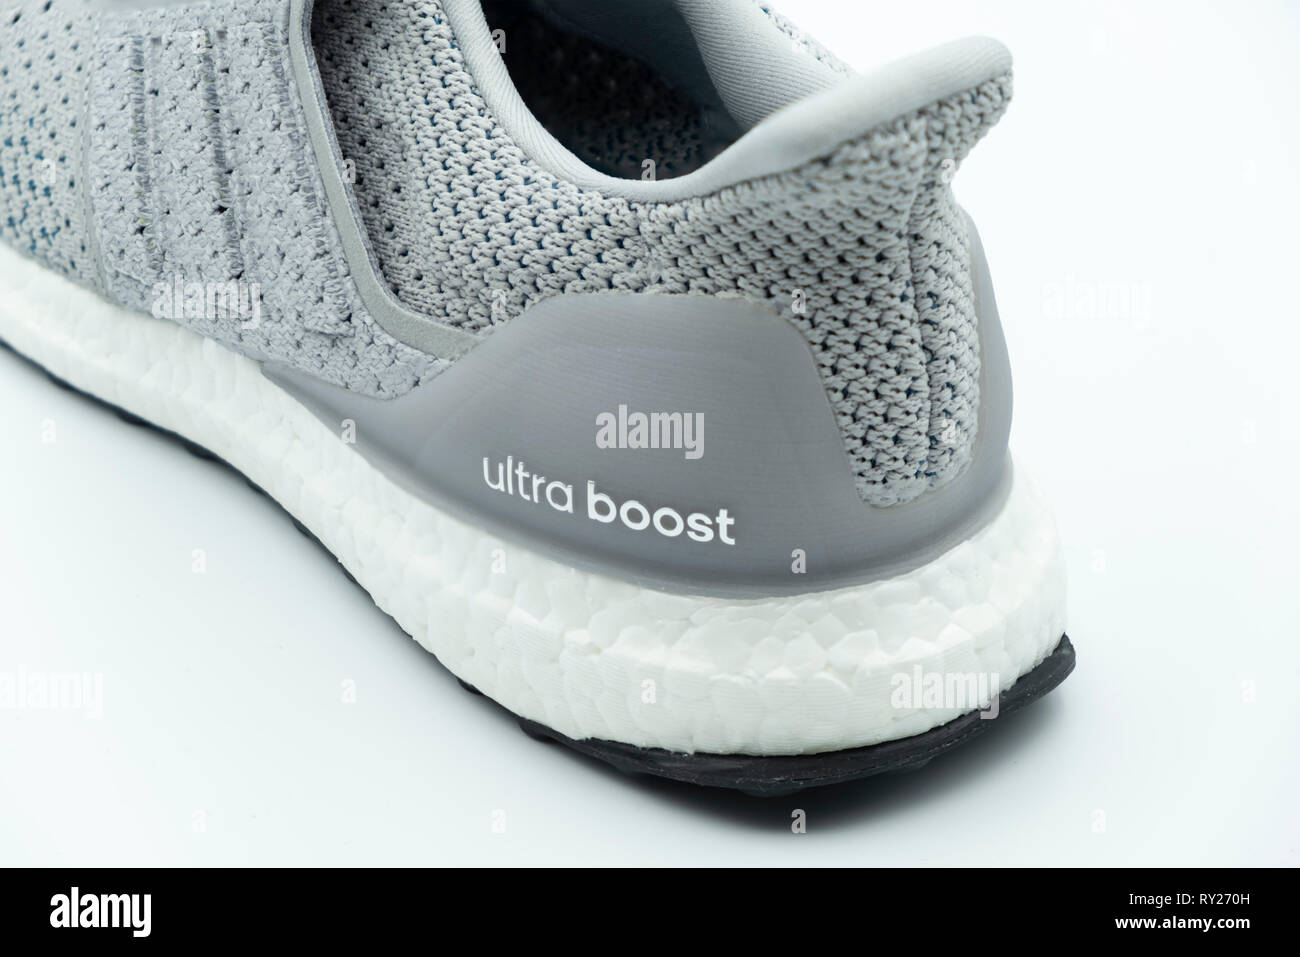 Adidas Ultraboost close up Stock Photo - Alamy